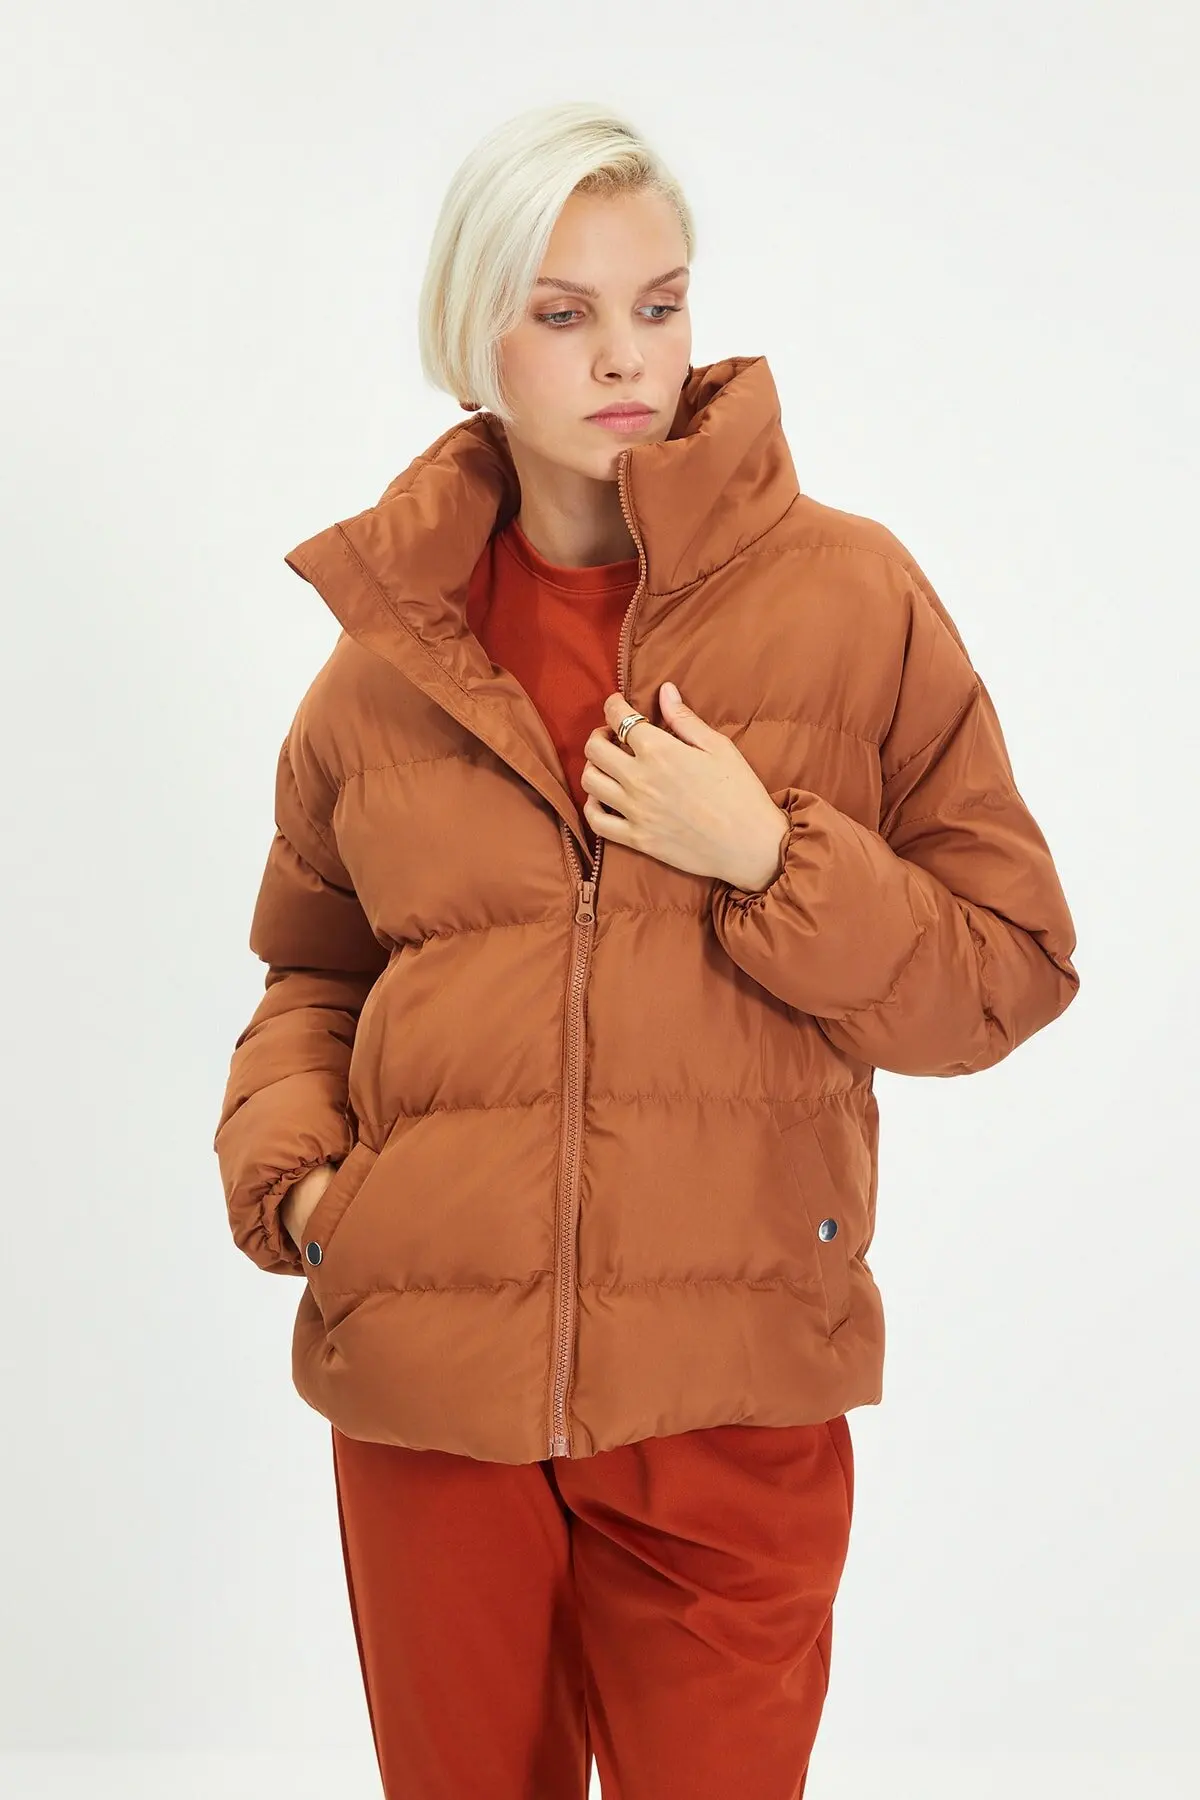 Winter Parka Women Coat Jackets For Female Polyester Bomber Jacket Elegant Outwear Puffed